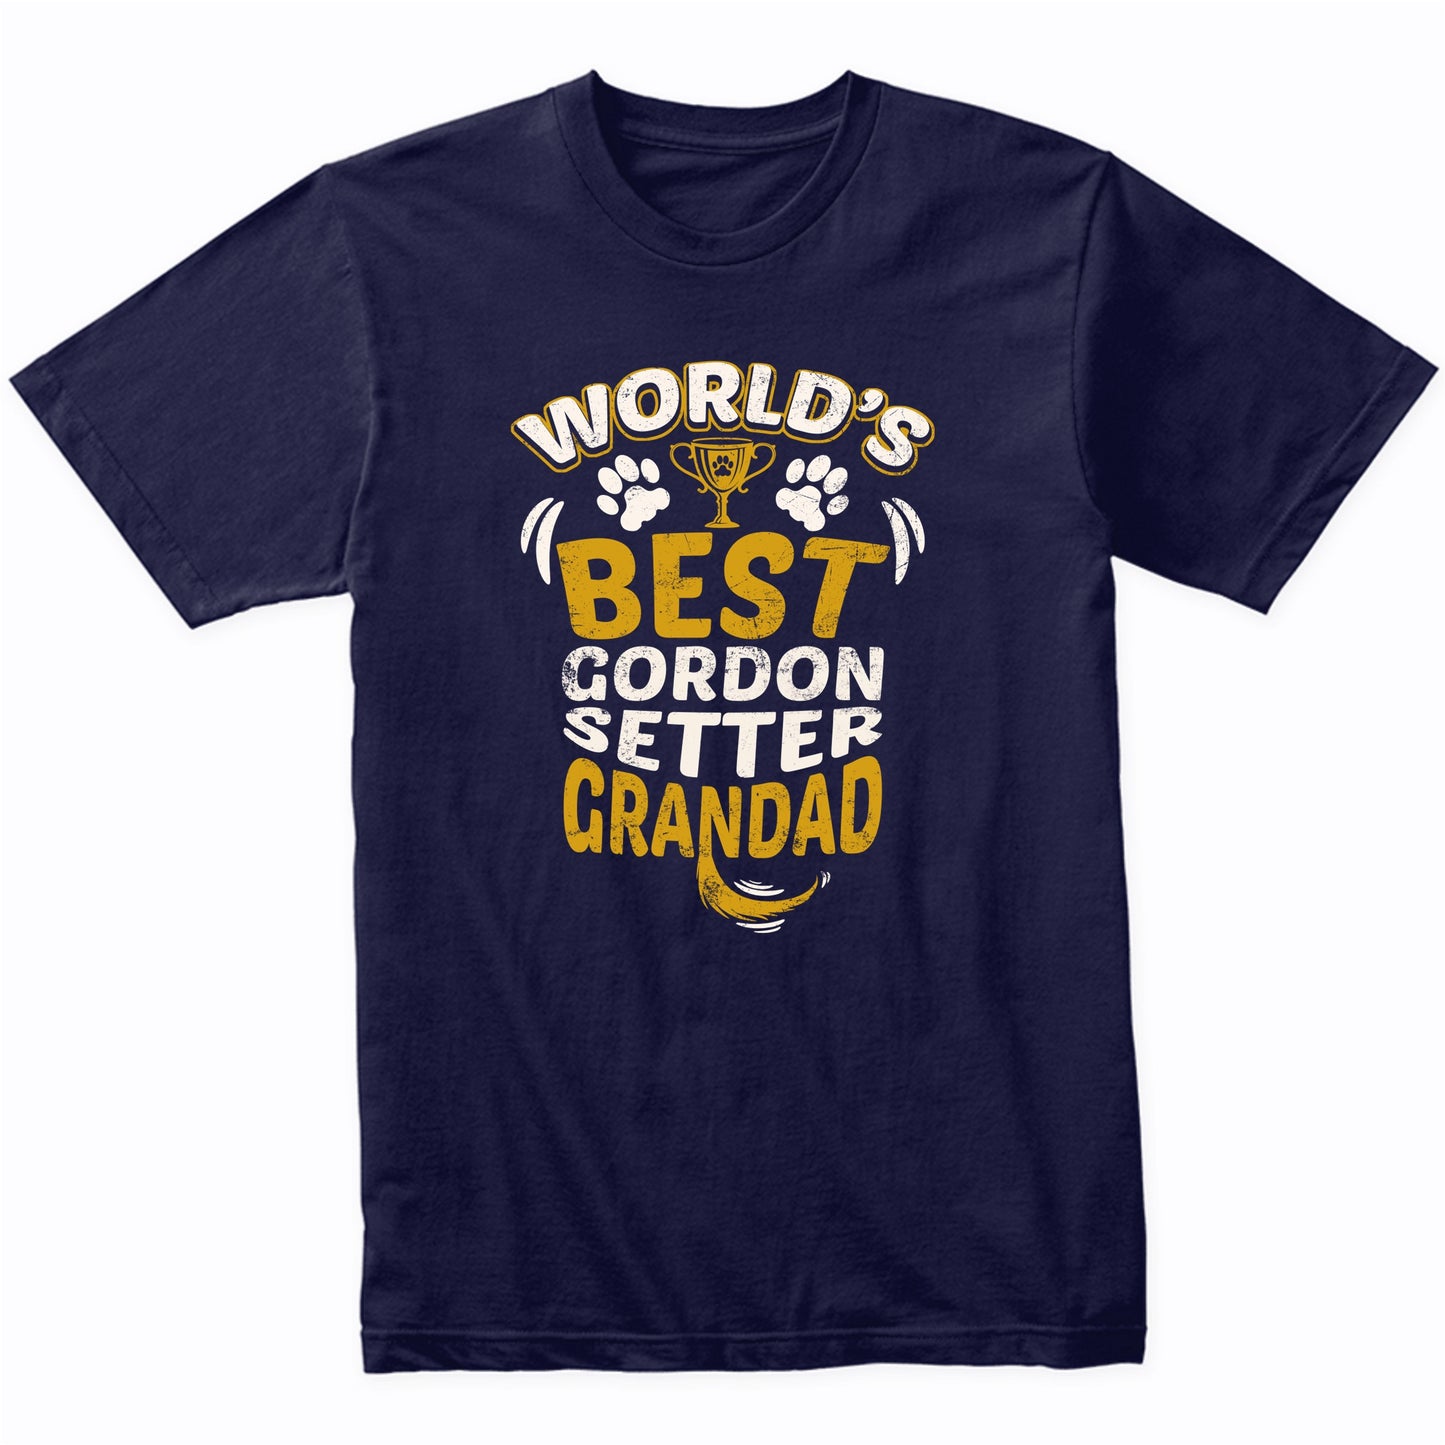 World's Best Gordon Setter Grandad Graphic T-Shirt